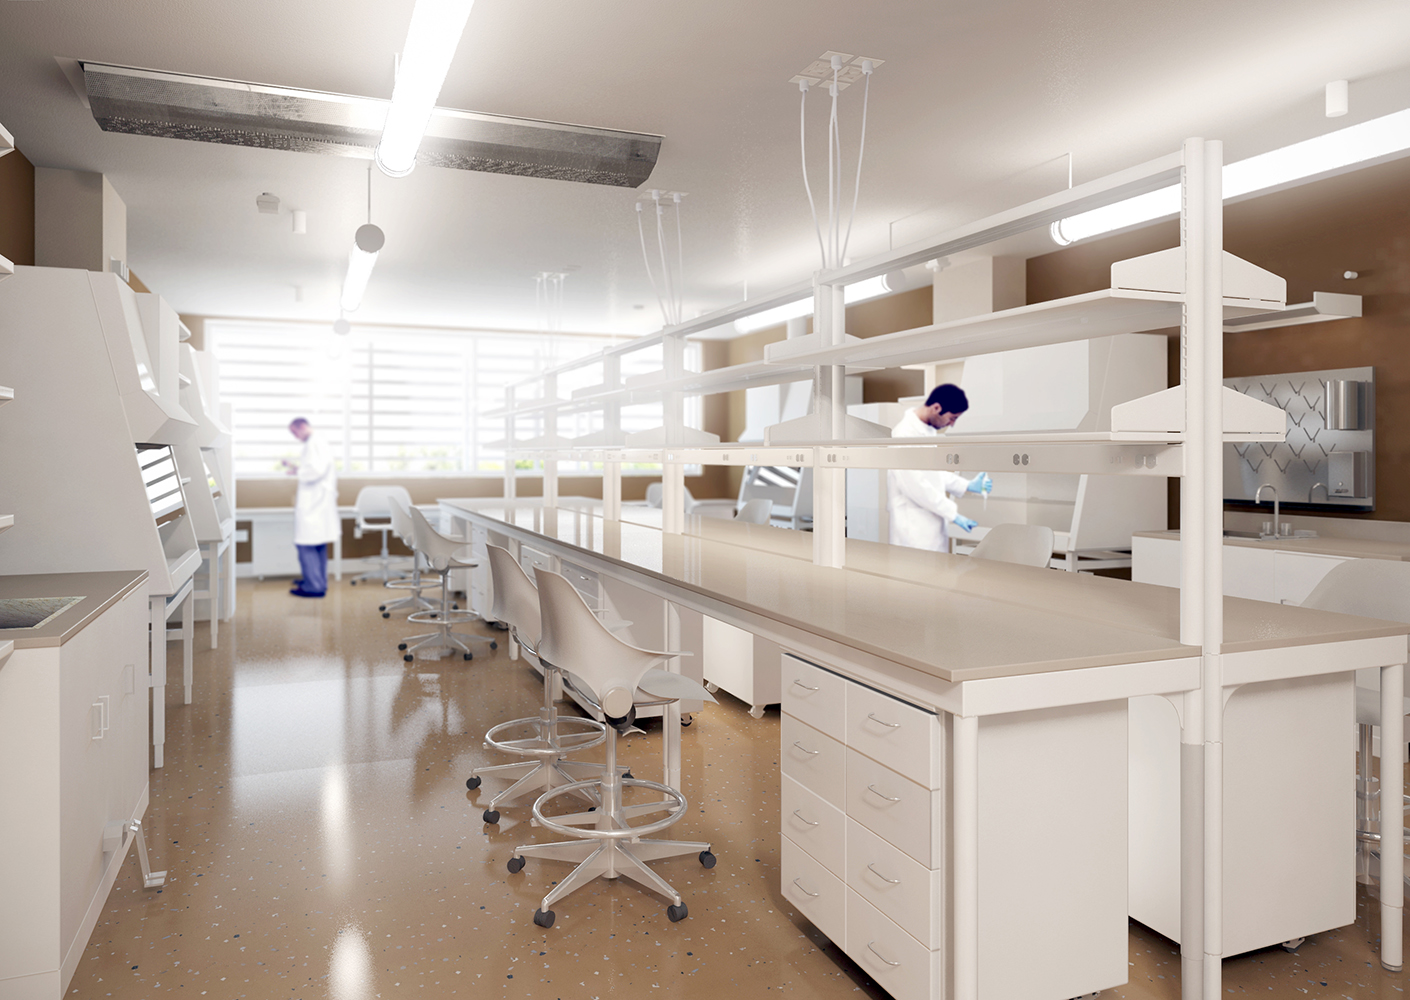 Interior view of a biocontainment lab